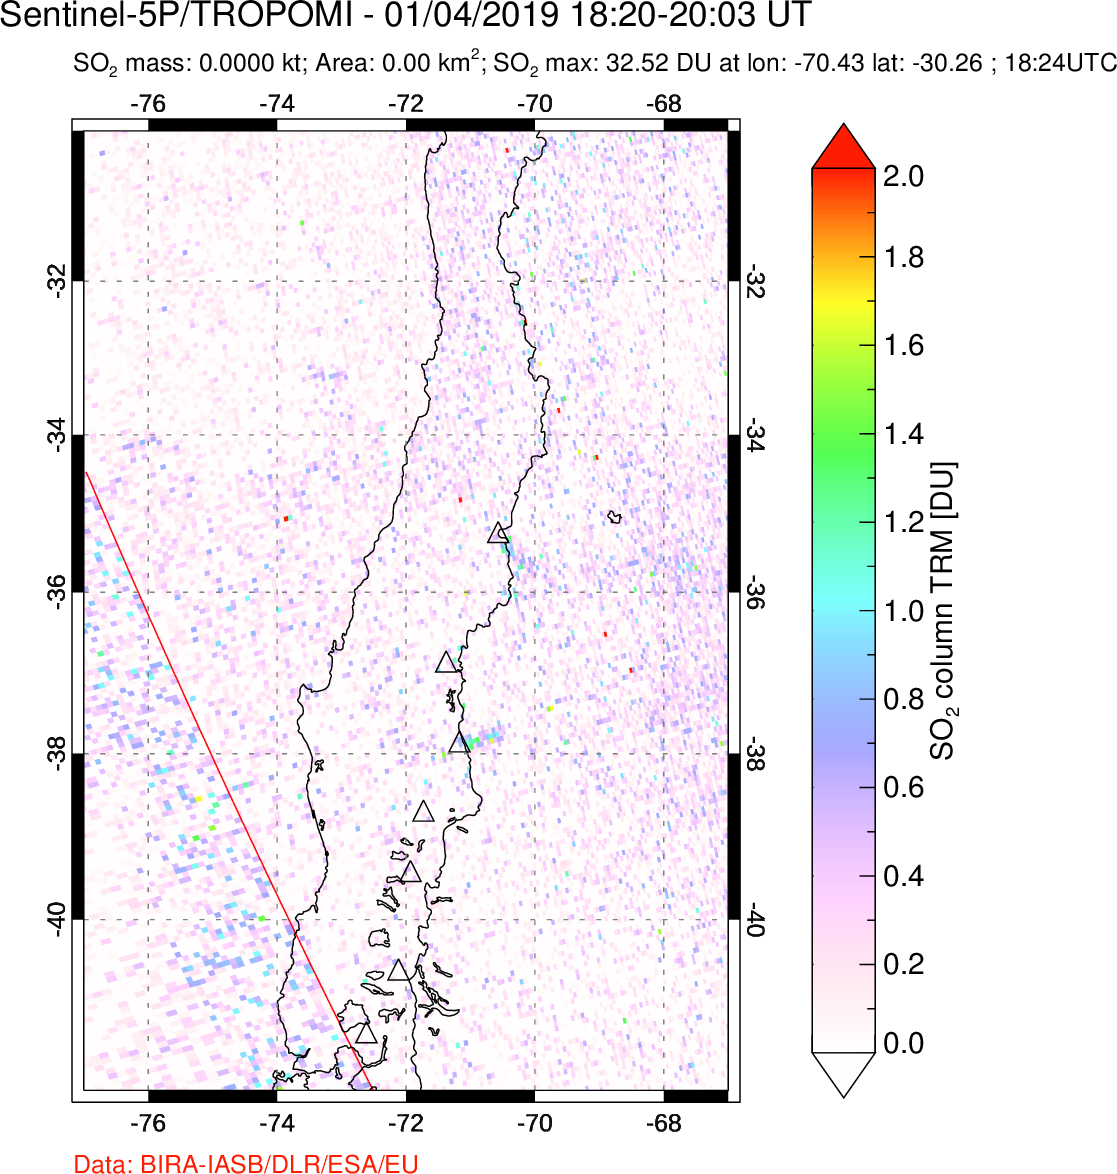 A sulfur dioxide image over Central Chile on Jan 04, 2019.